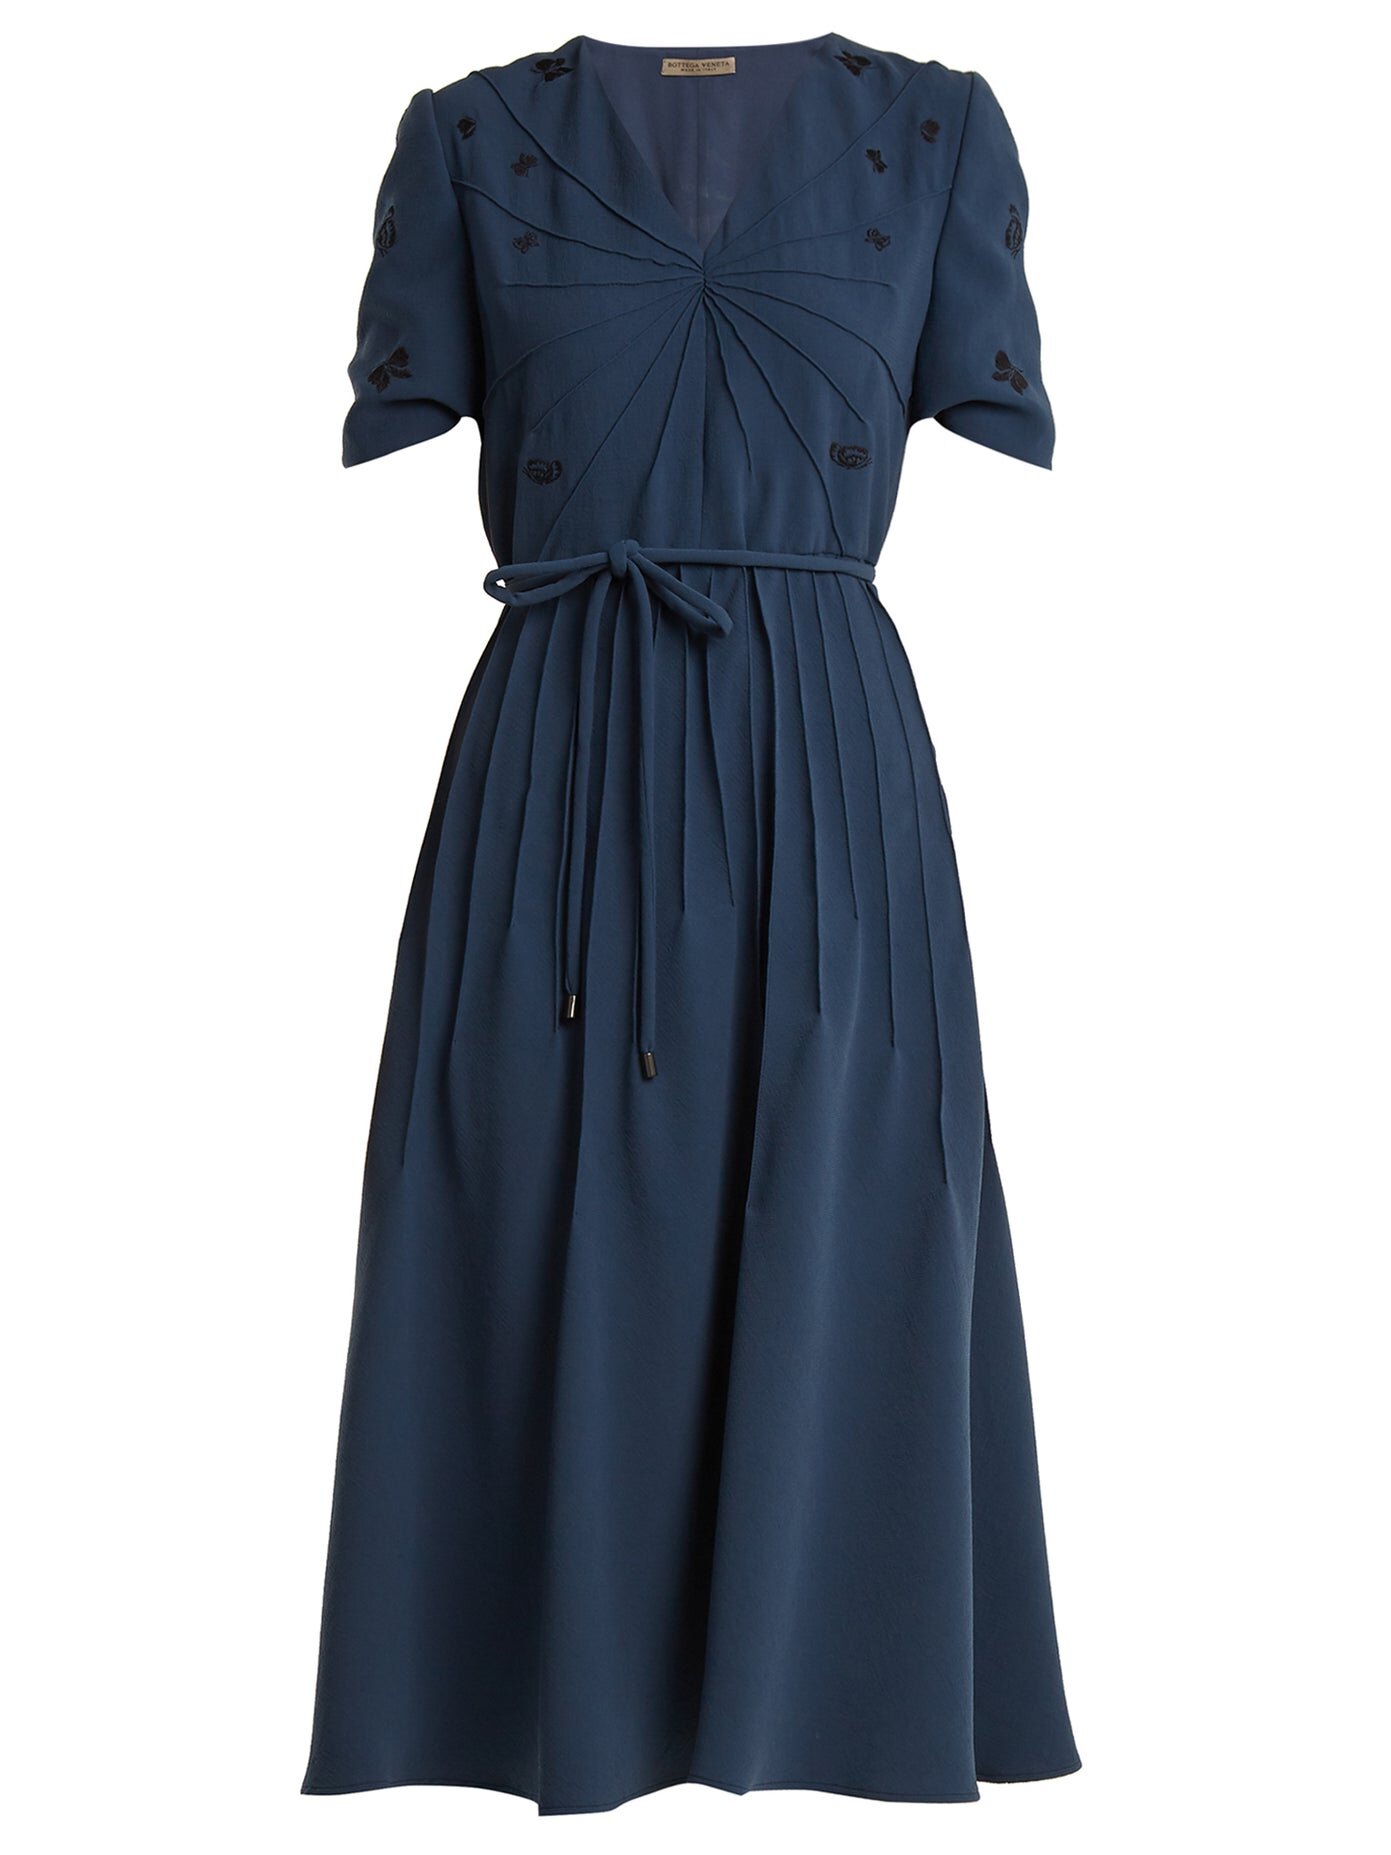 Bottega Veneta Embroidered Crepe Dress in Petrol Blue — UFO No More